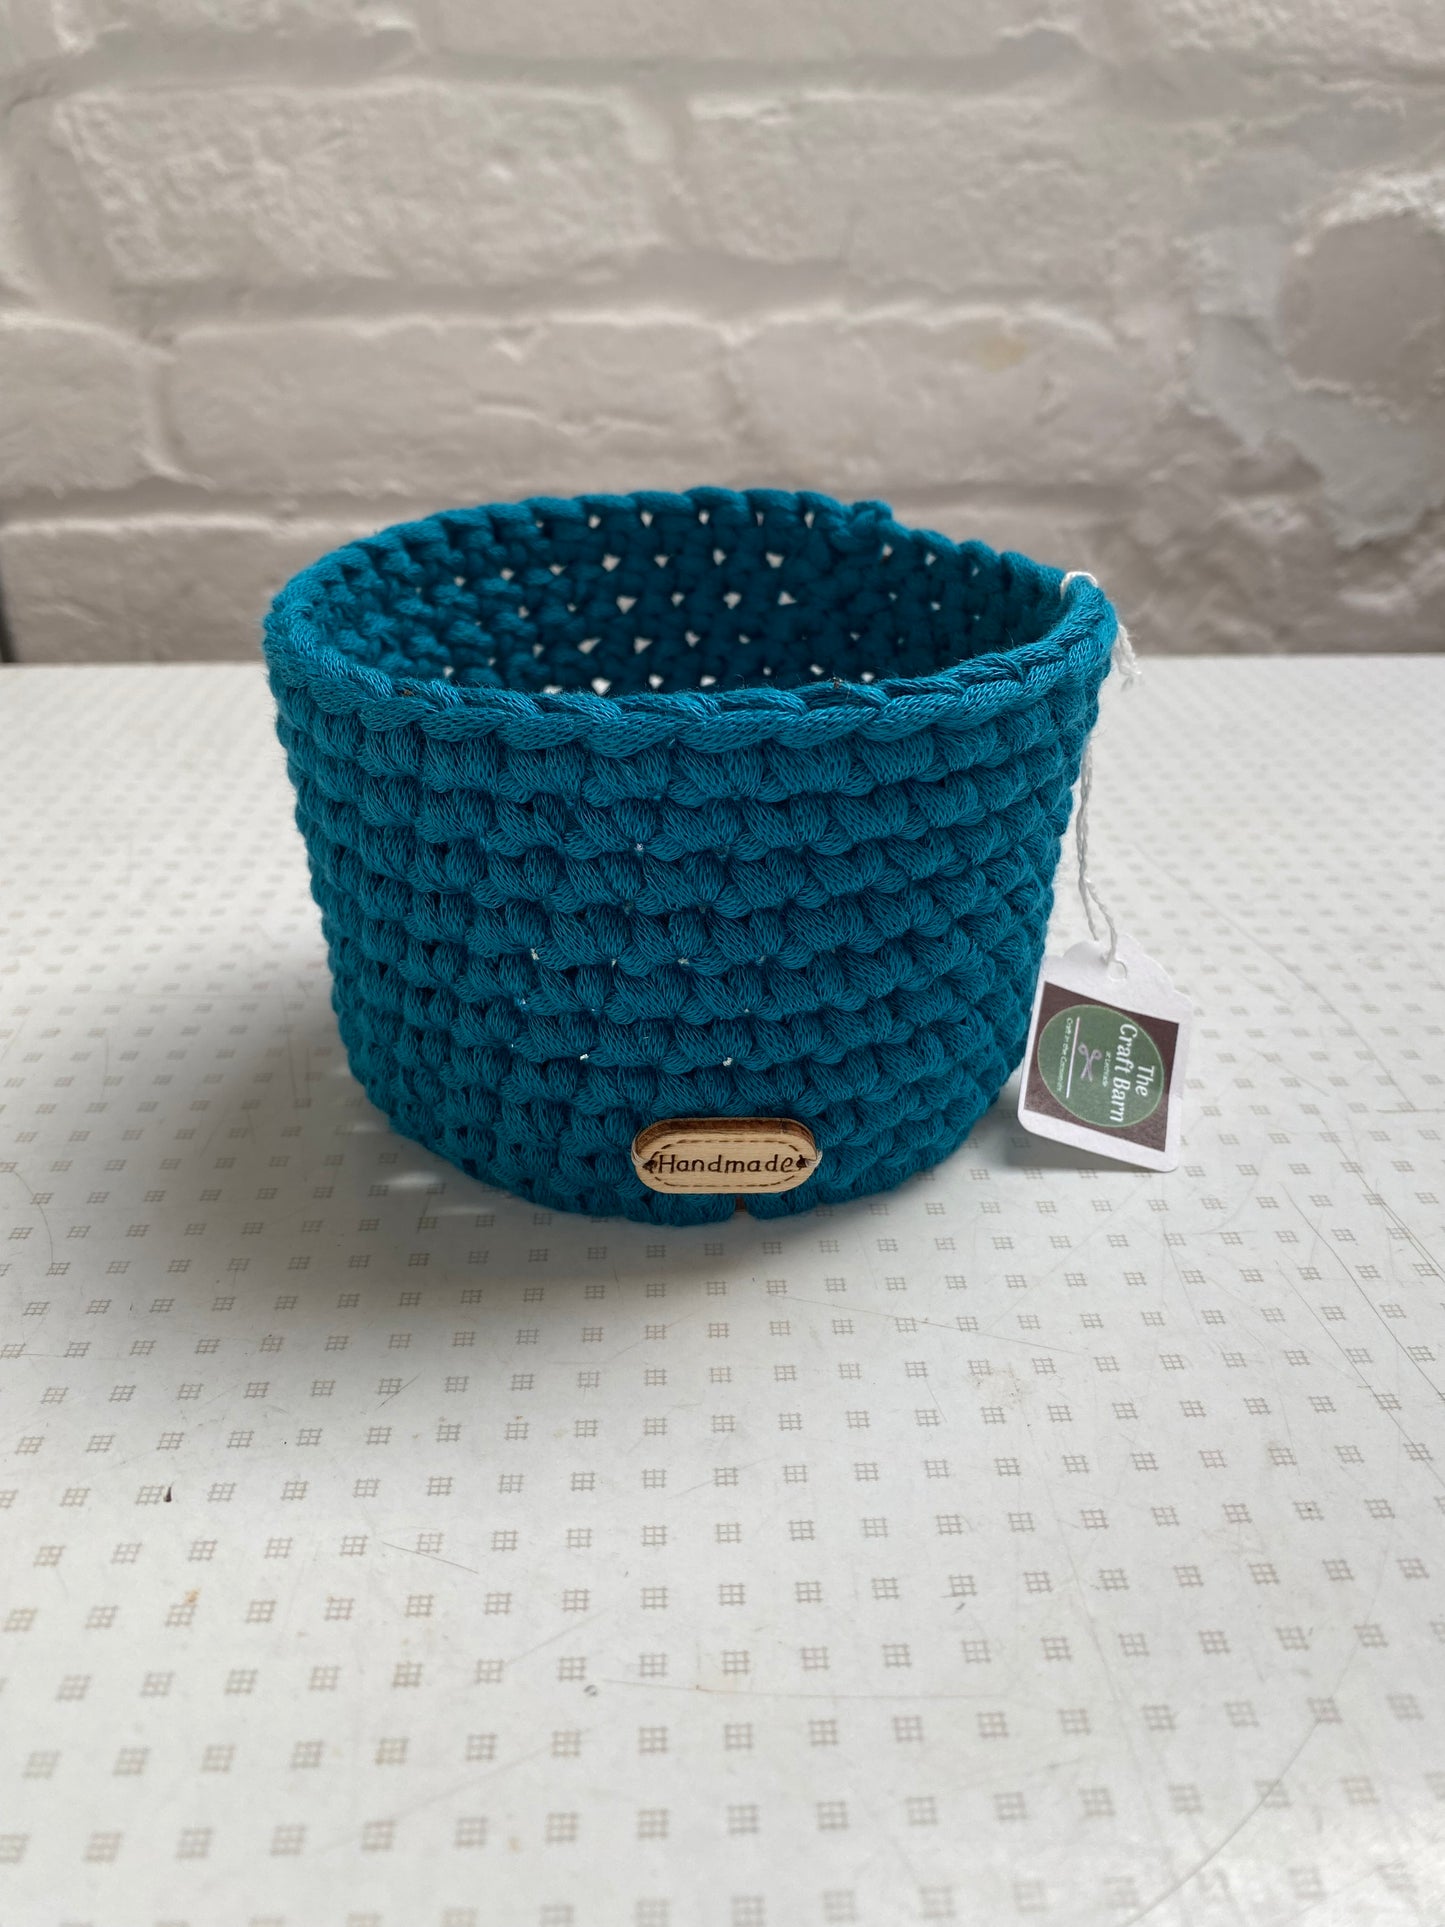 Crocheted Baskets